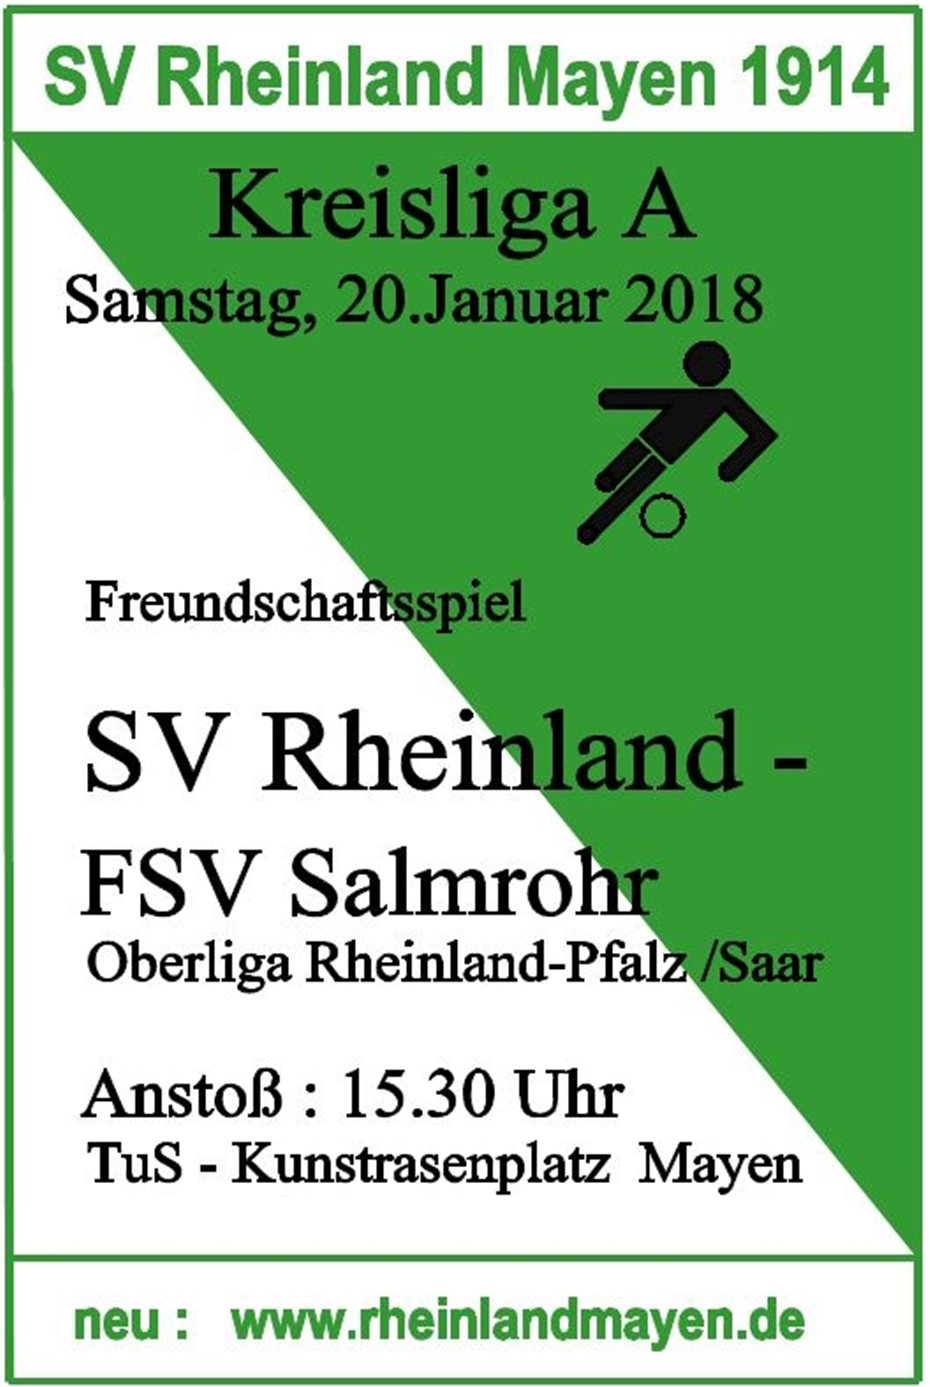 FSV Salmrohr (Oberliga
Rheinland-Pfalz/Saar) ist zu Gast